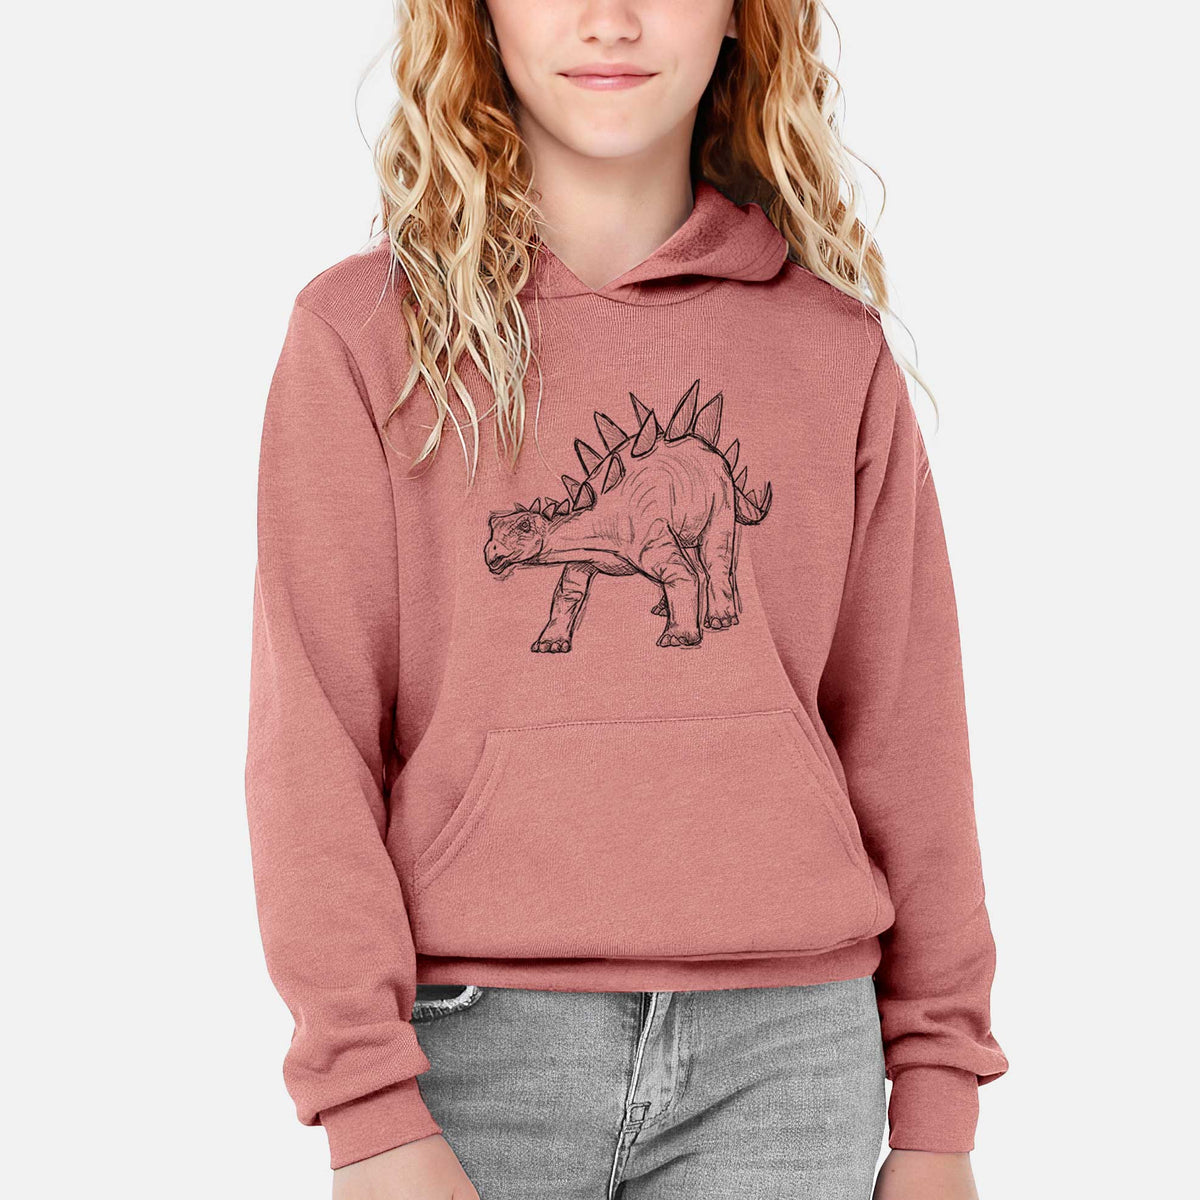 Stegosaurus Stenops - Youth Hoodie Sweatshirt